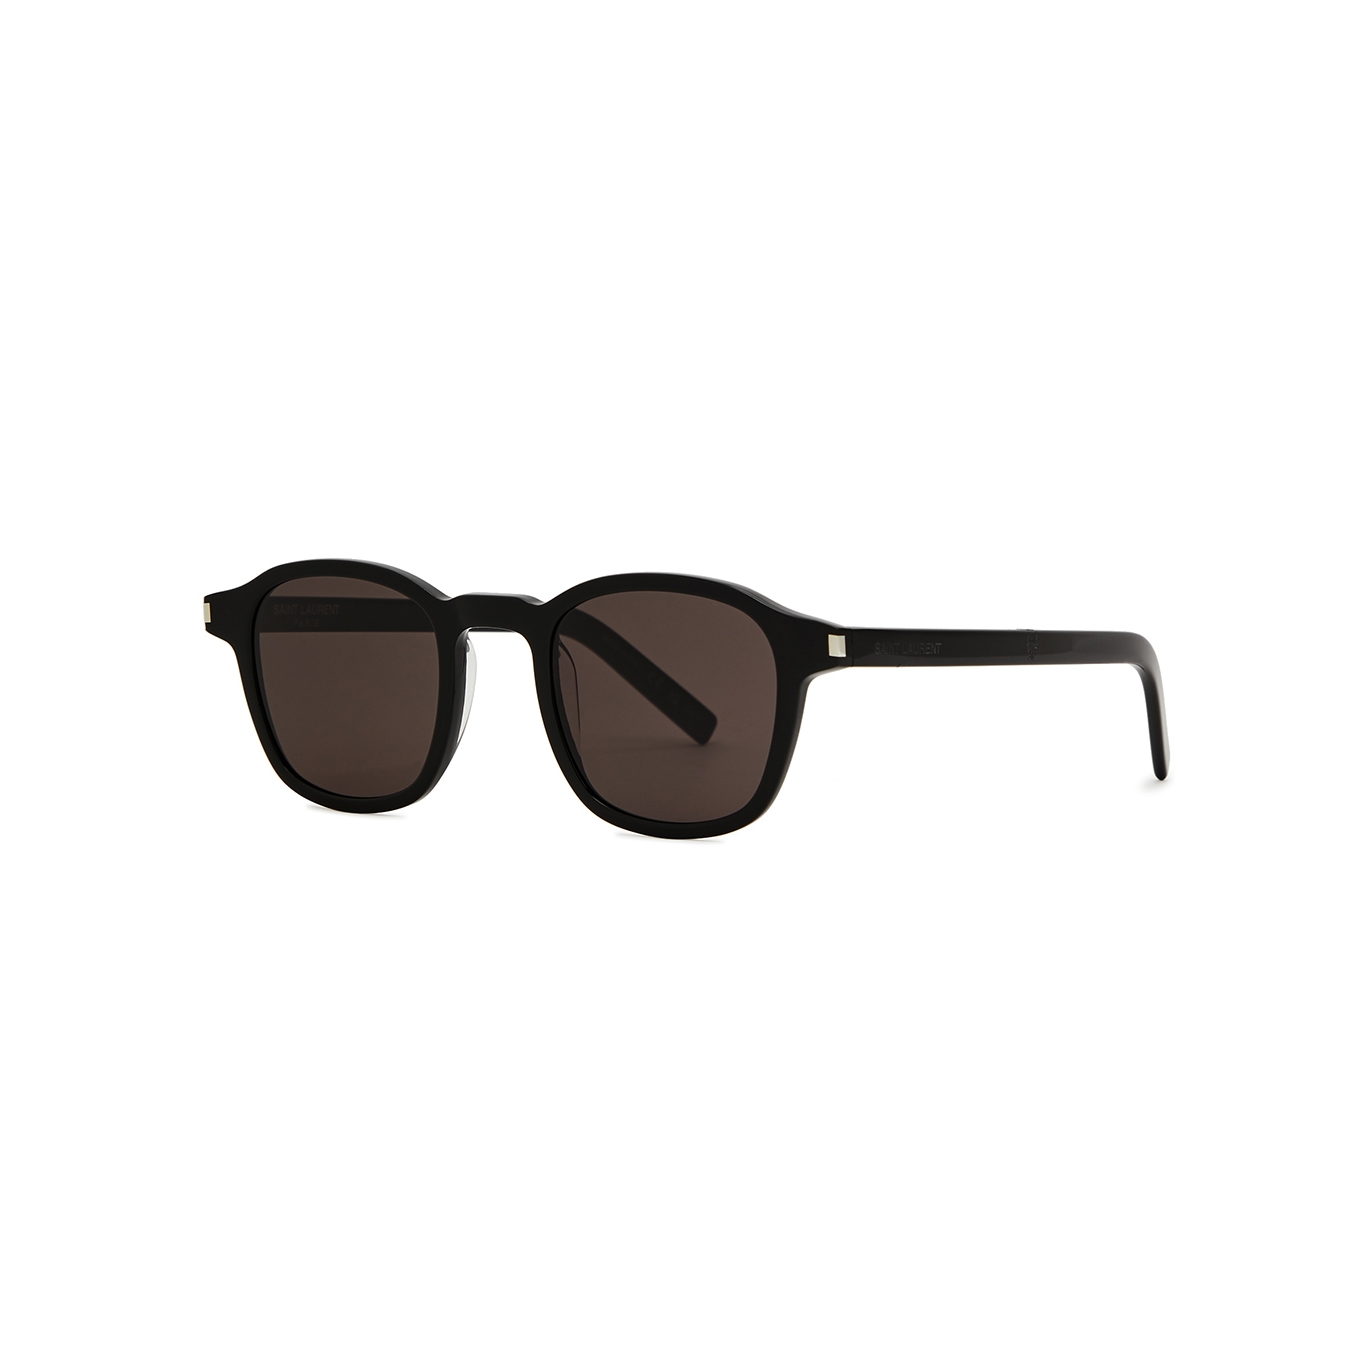 Saint Laurent Round-frame Sunglasses, Sunglasses, Engraved Arms - Black